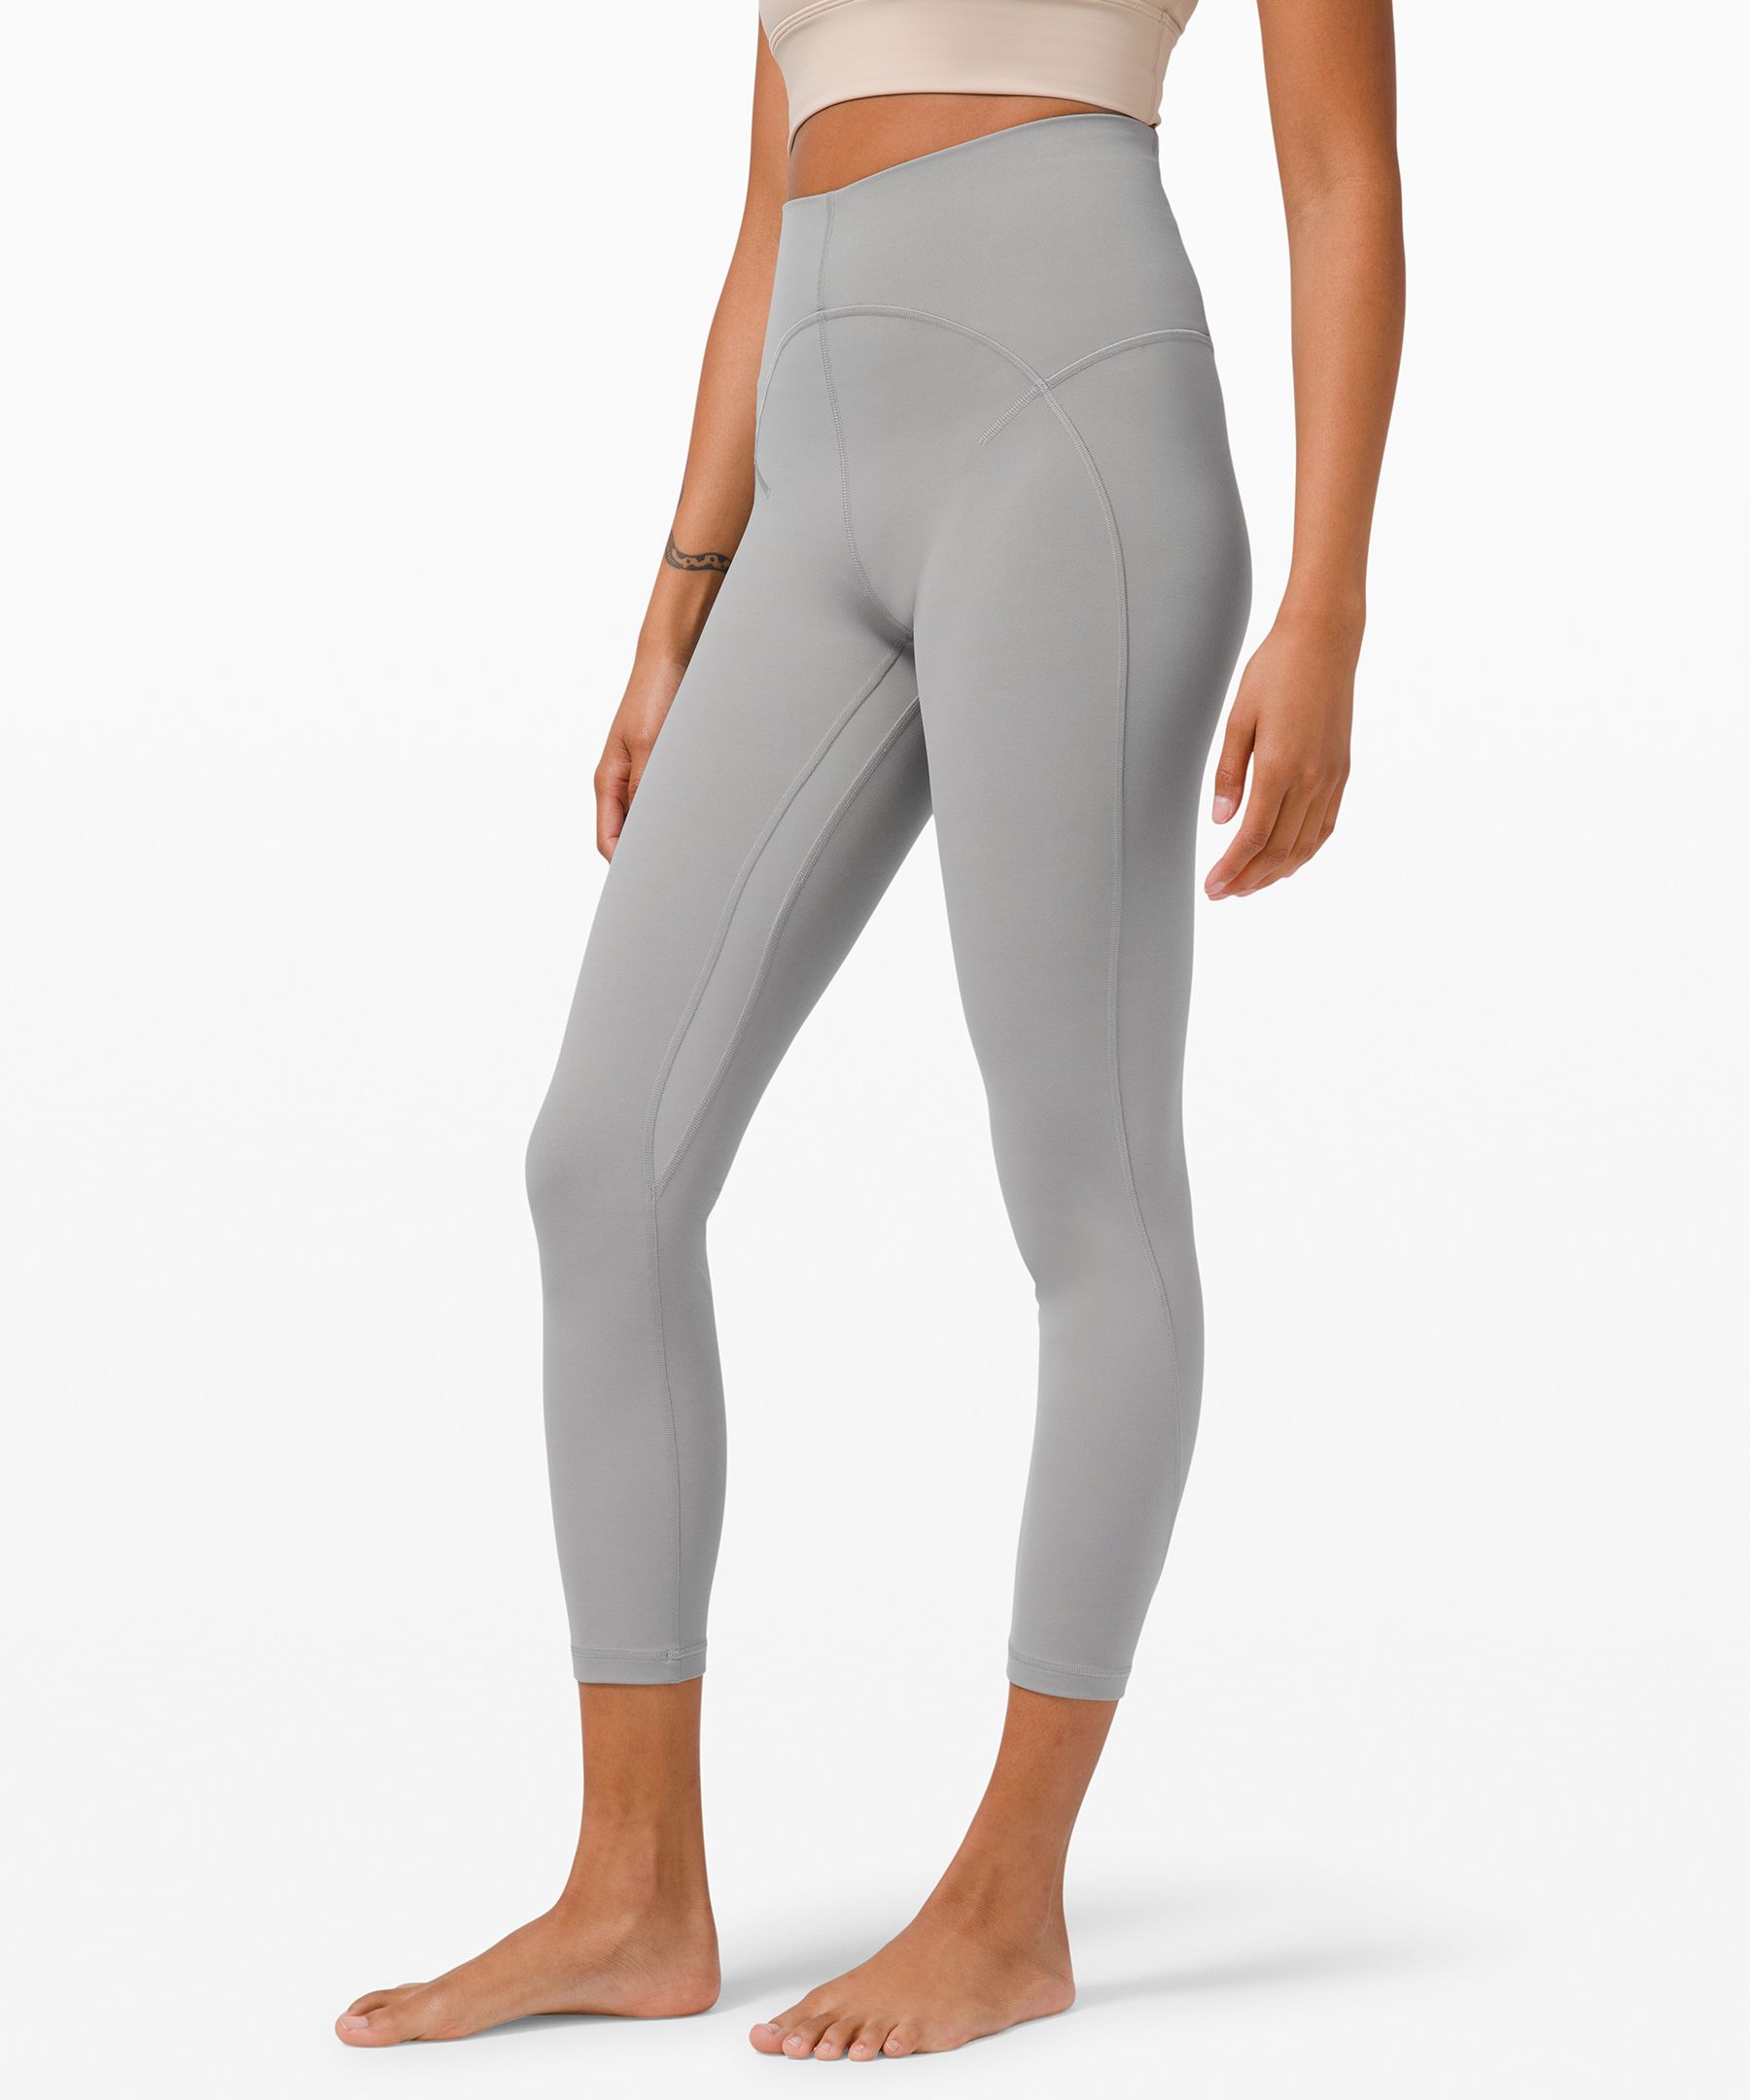 grey lululemon pants